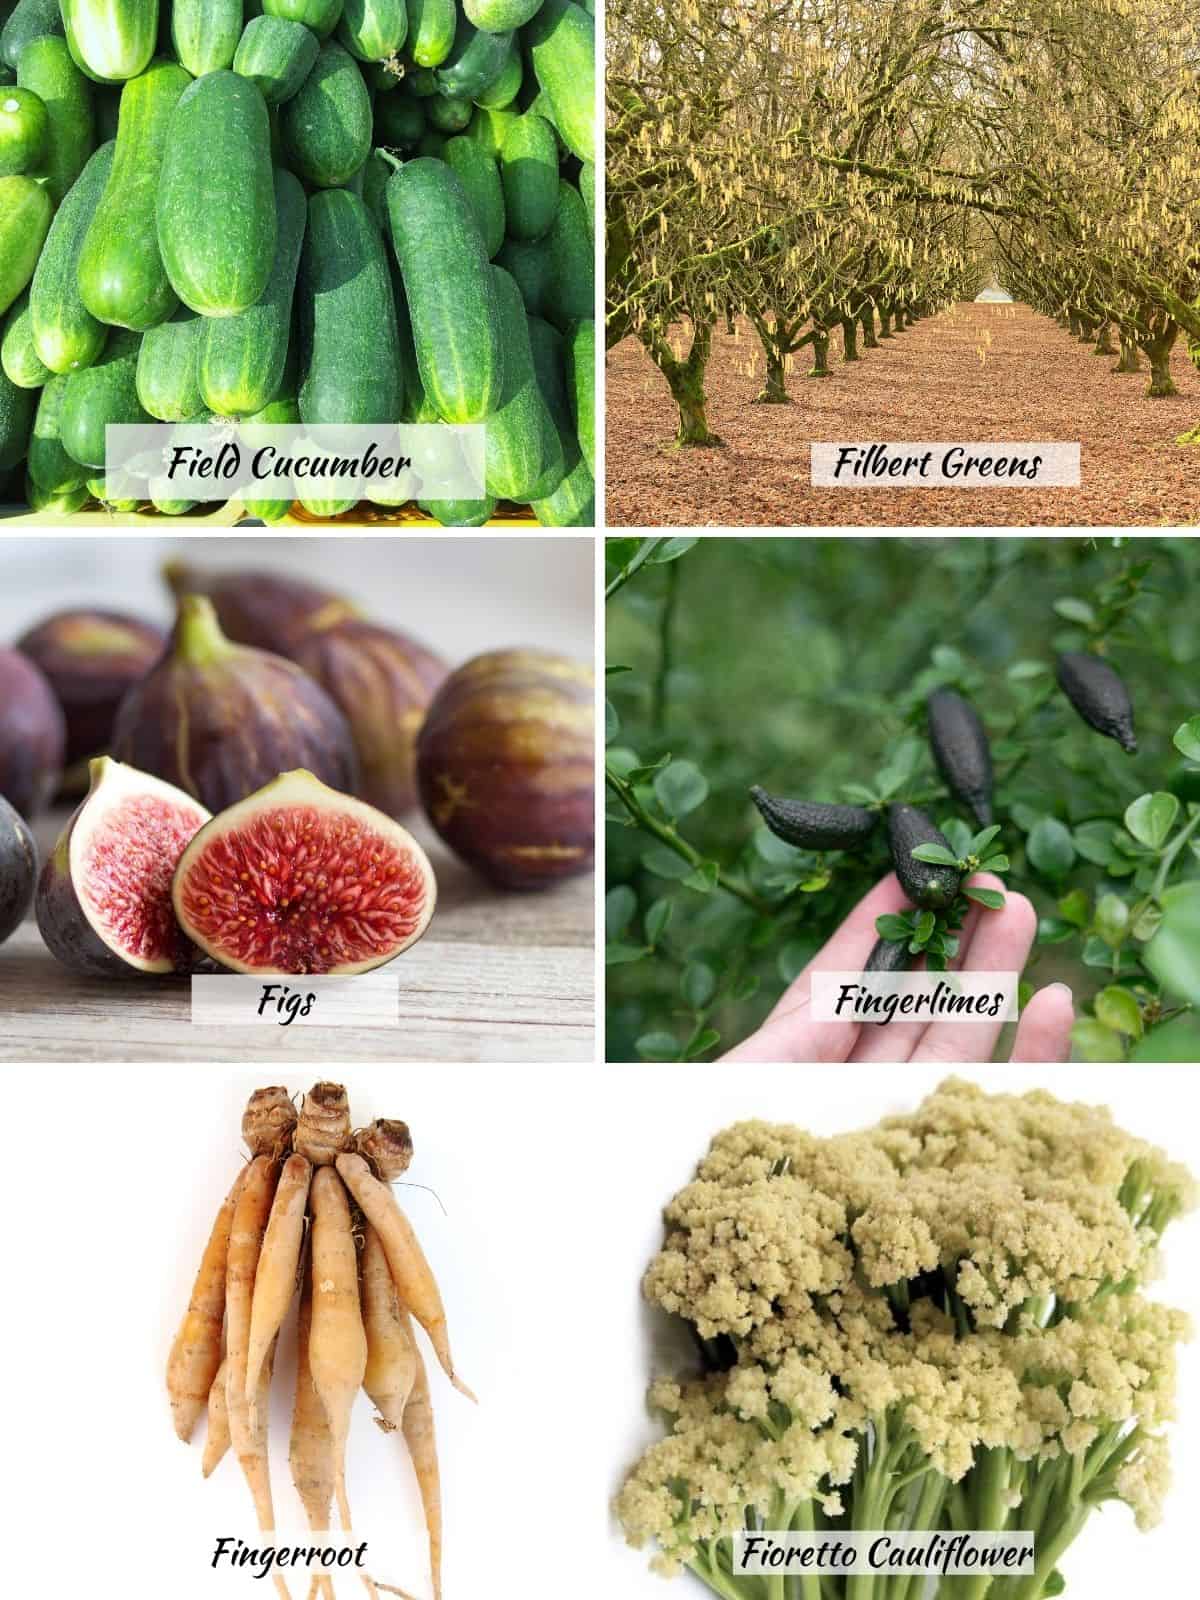 field cucumber, filber greens, fig, fingerlimes, fingerroot, fioretto cauliflower